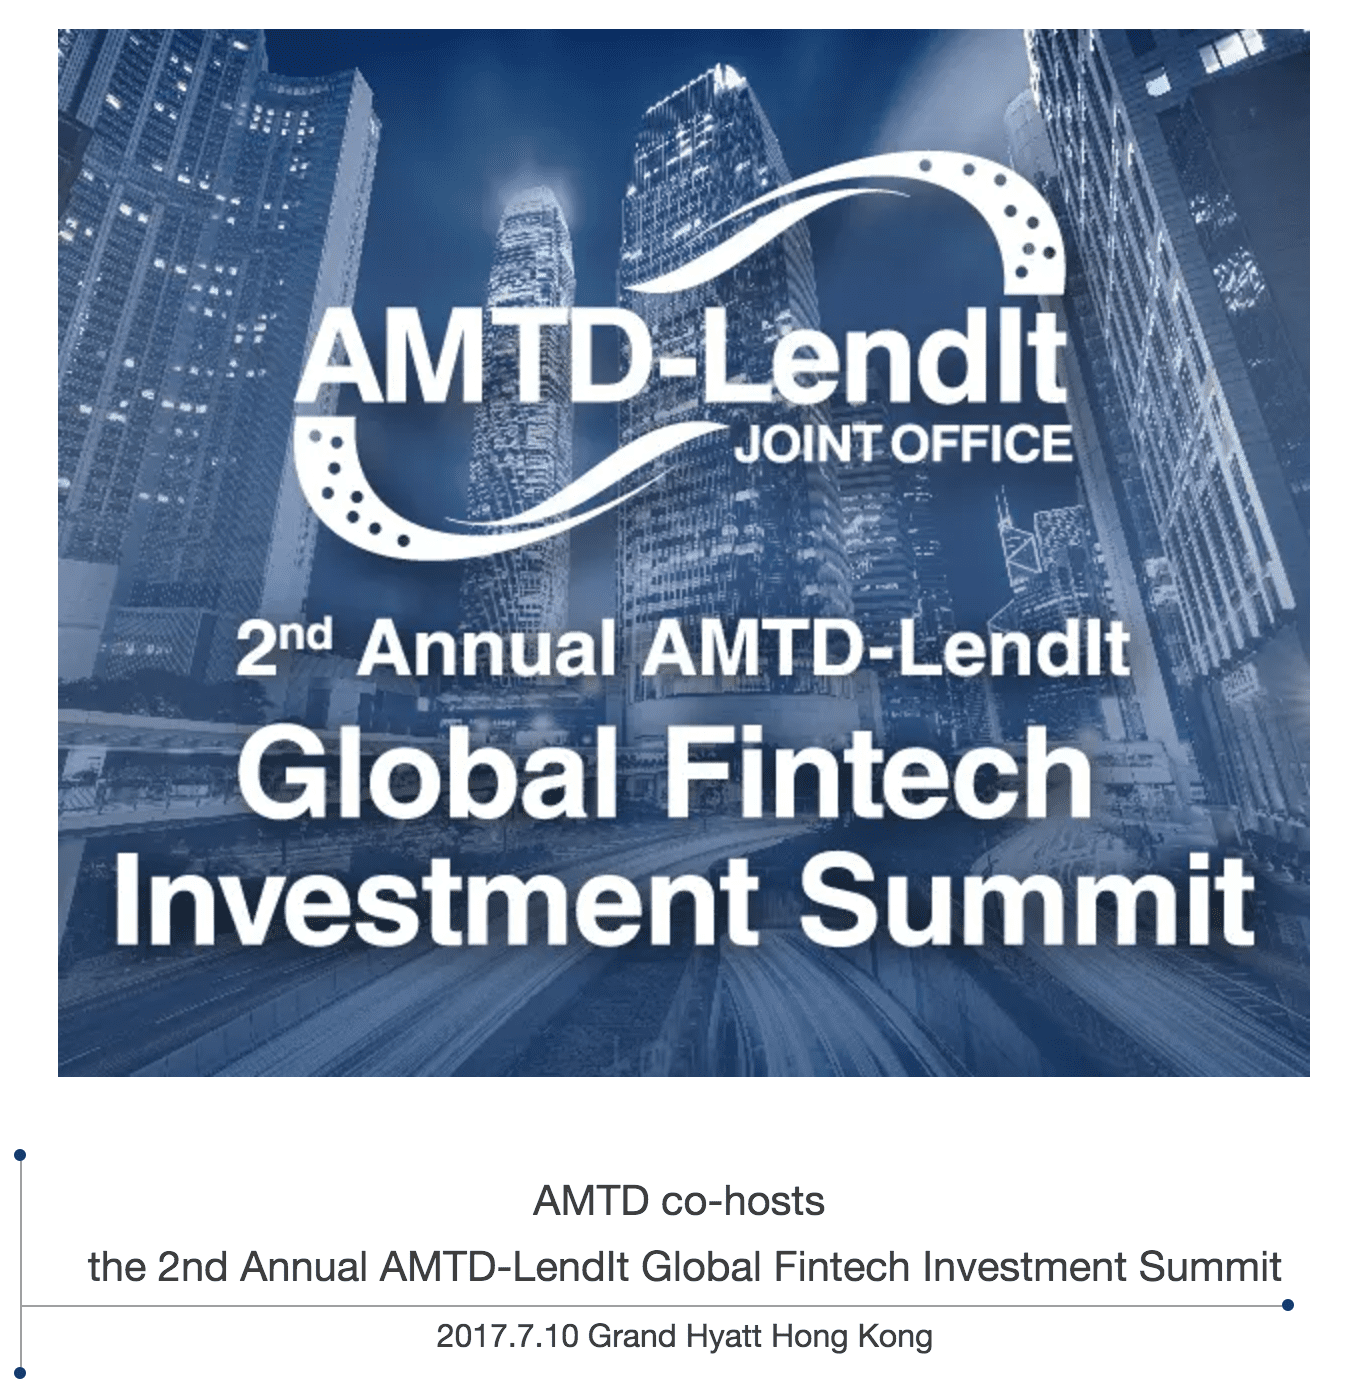 AMTD-LendIt Global Fintech Investment Summit is back!